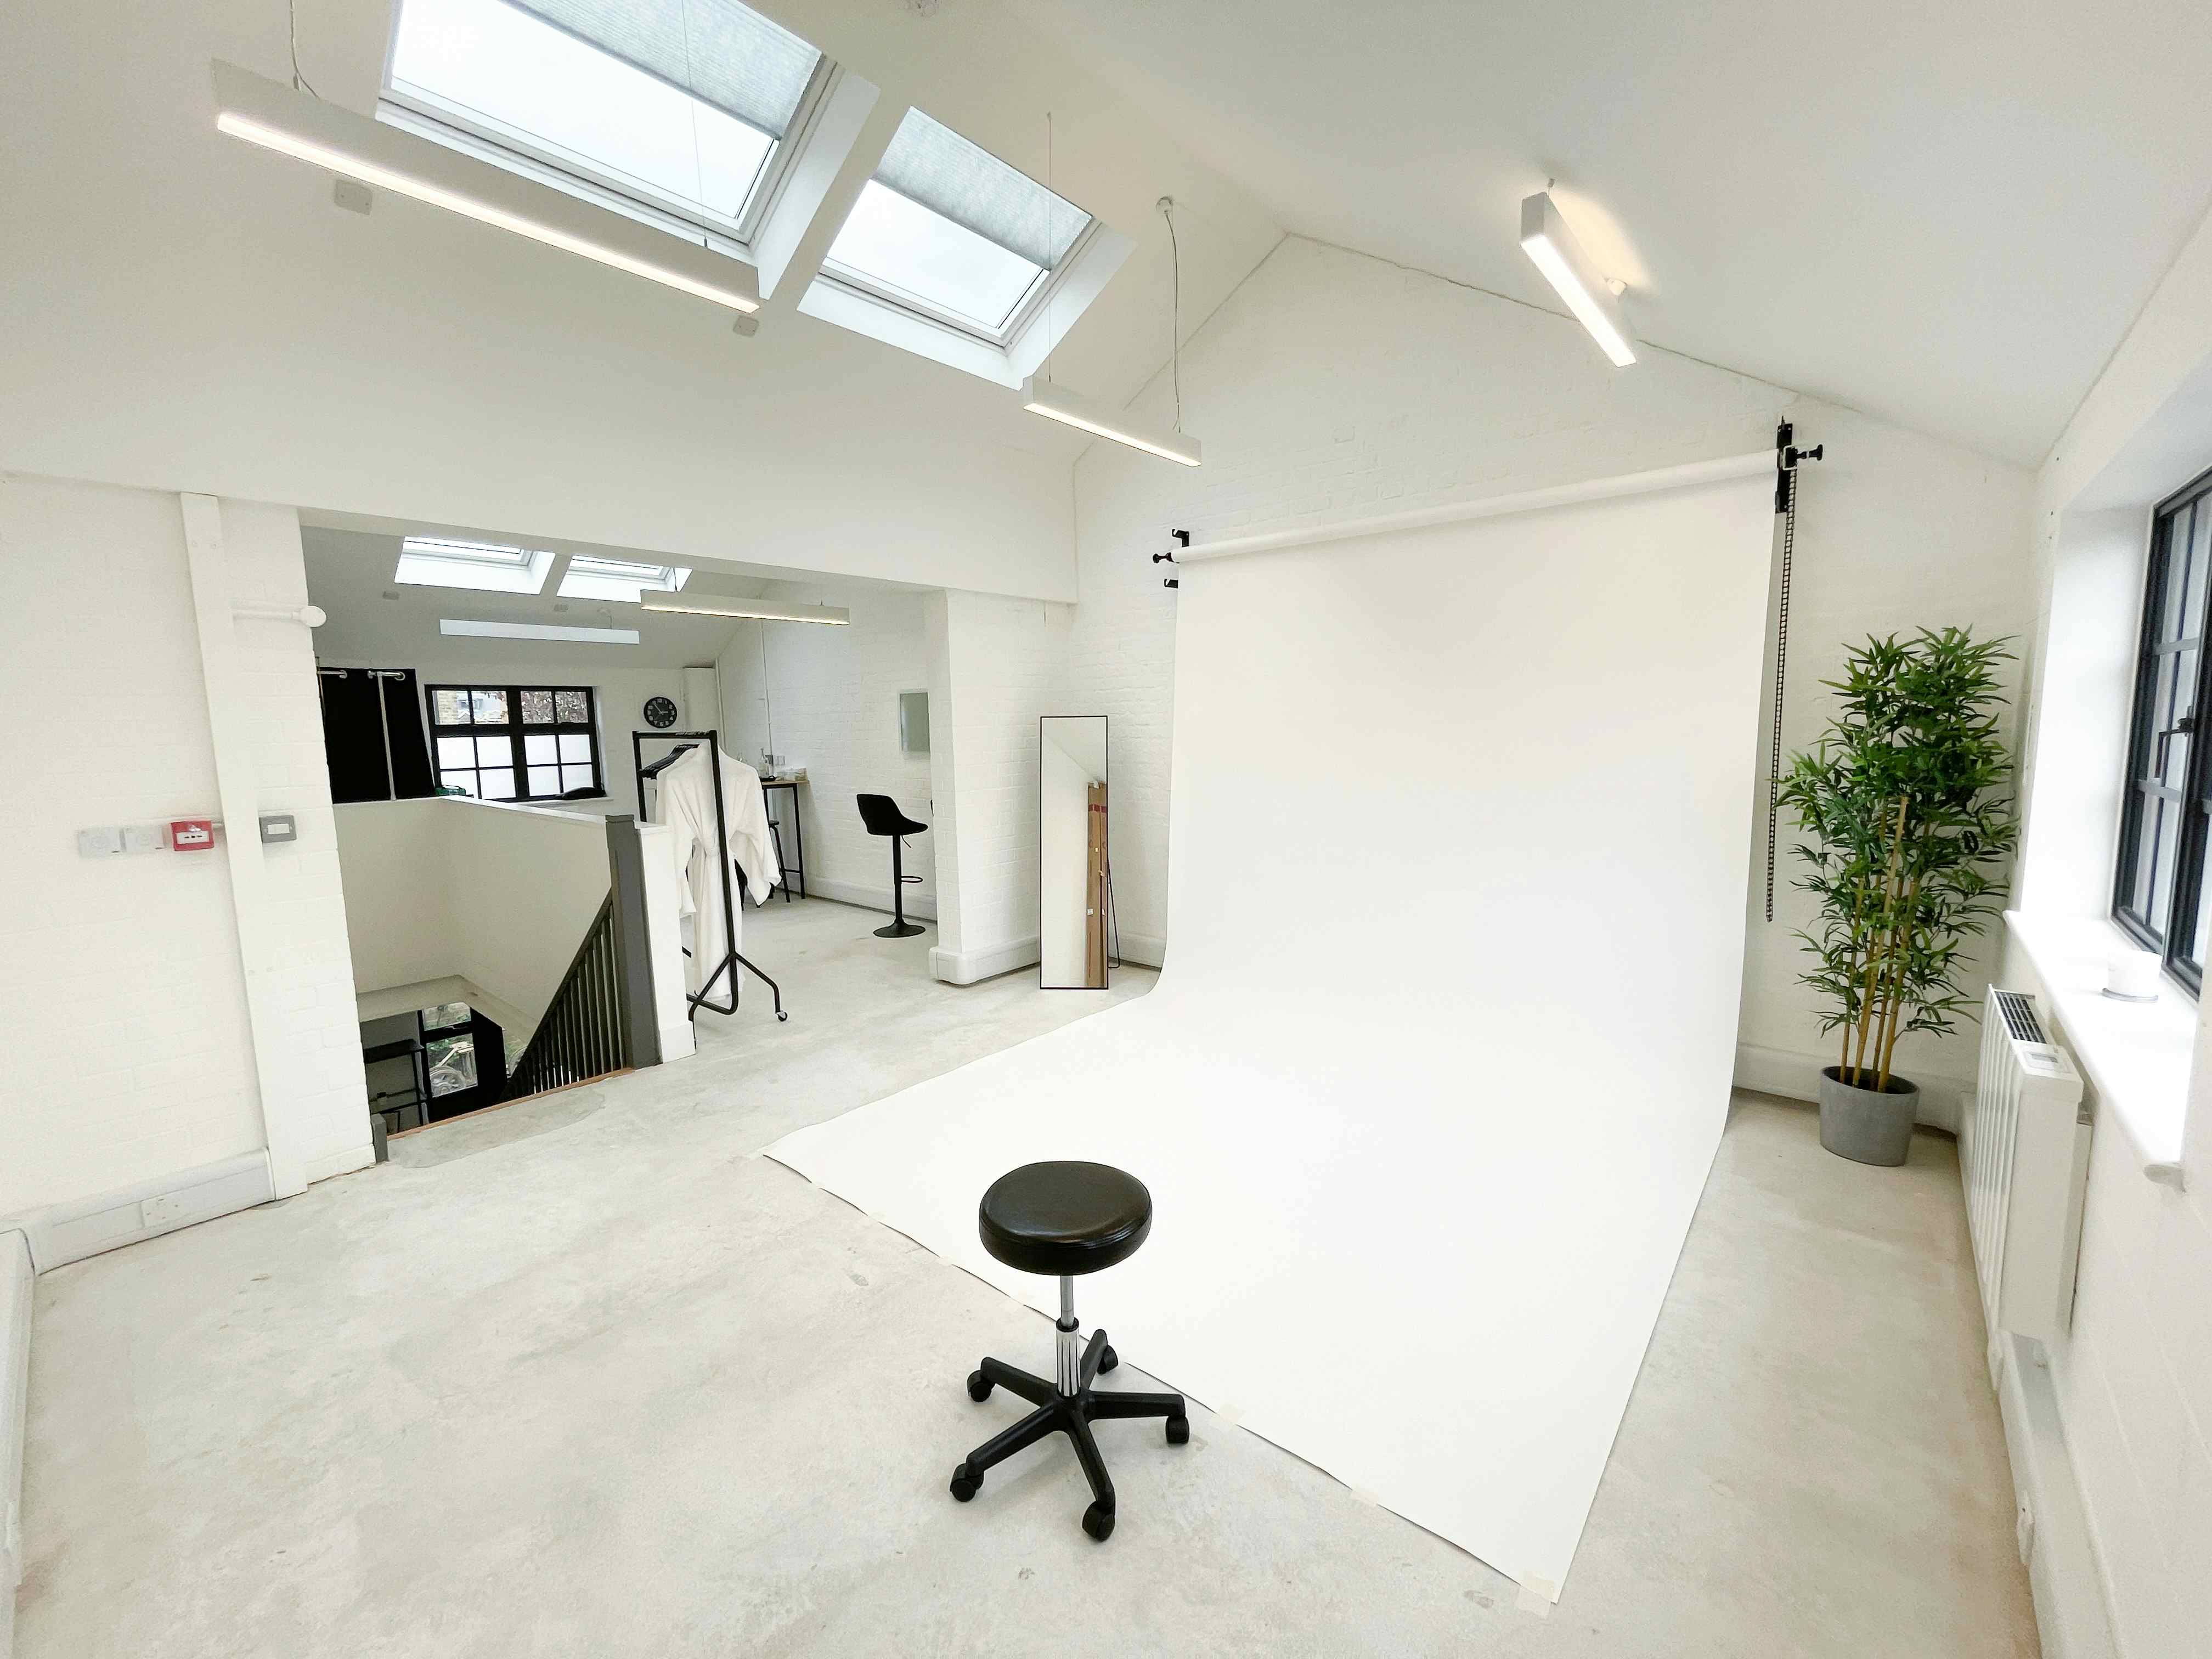 Everyangle Studio: Industrial Style Daylight Photo Studio in South West London, Everyangle Studio